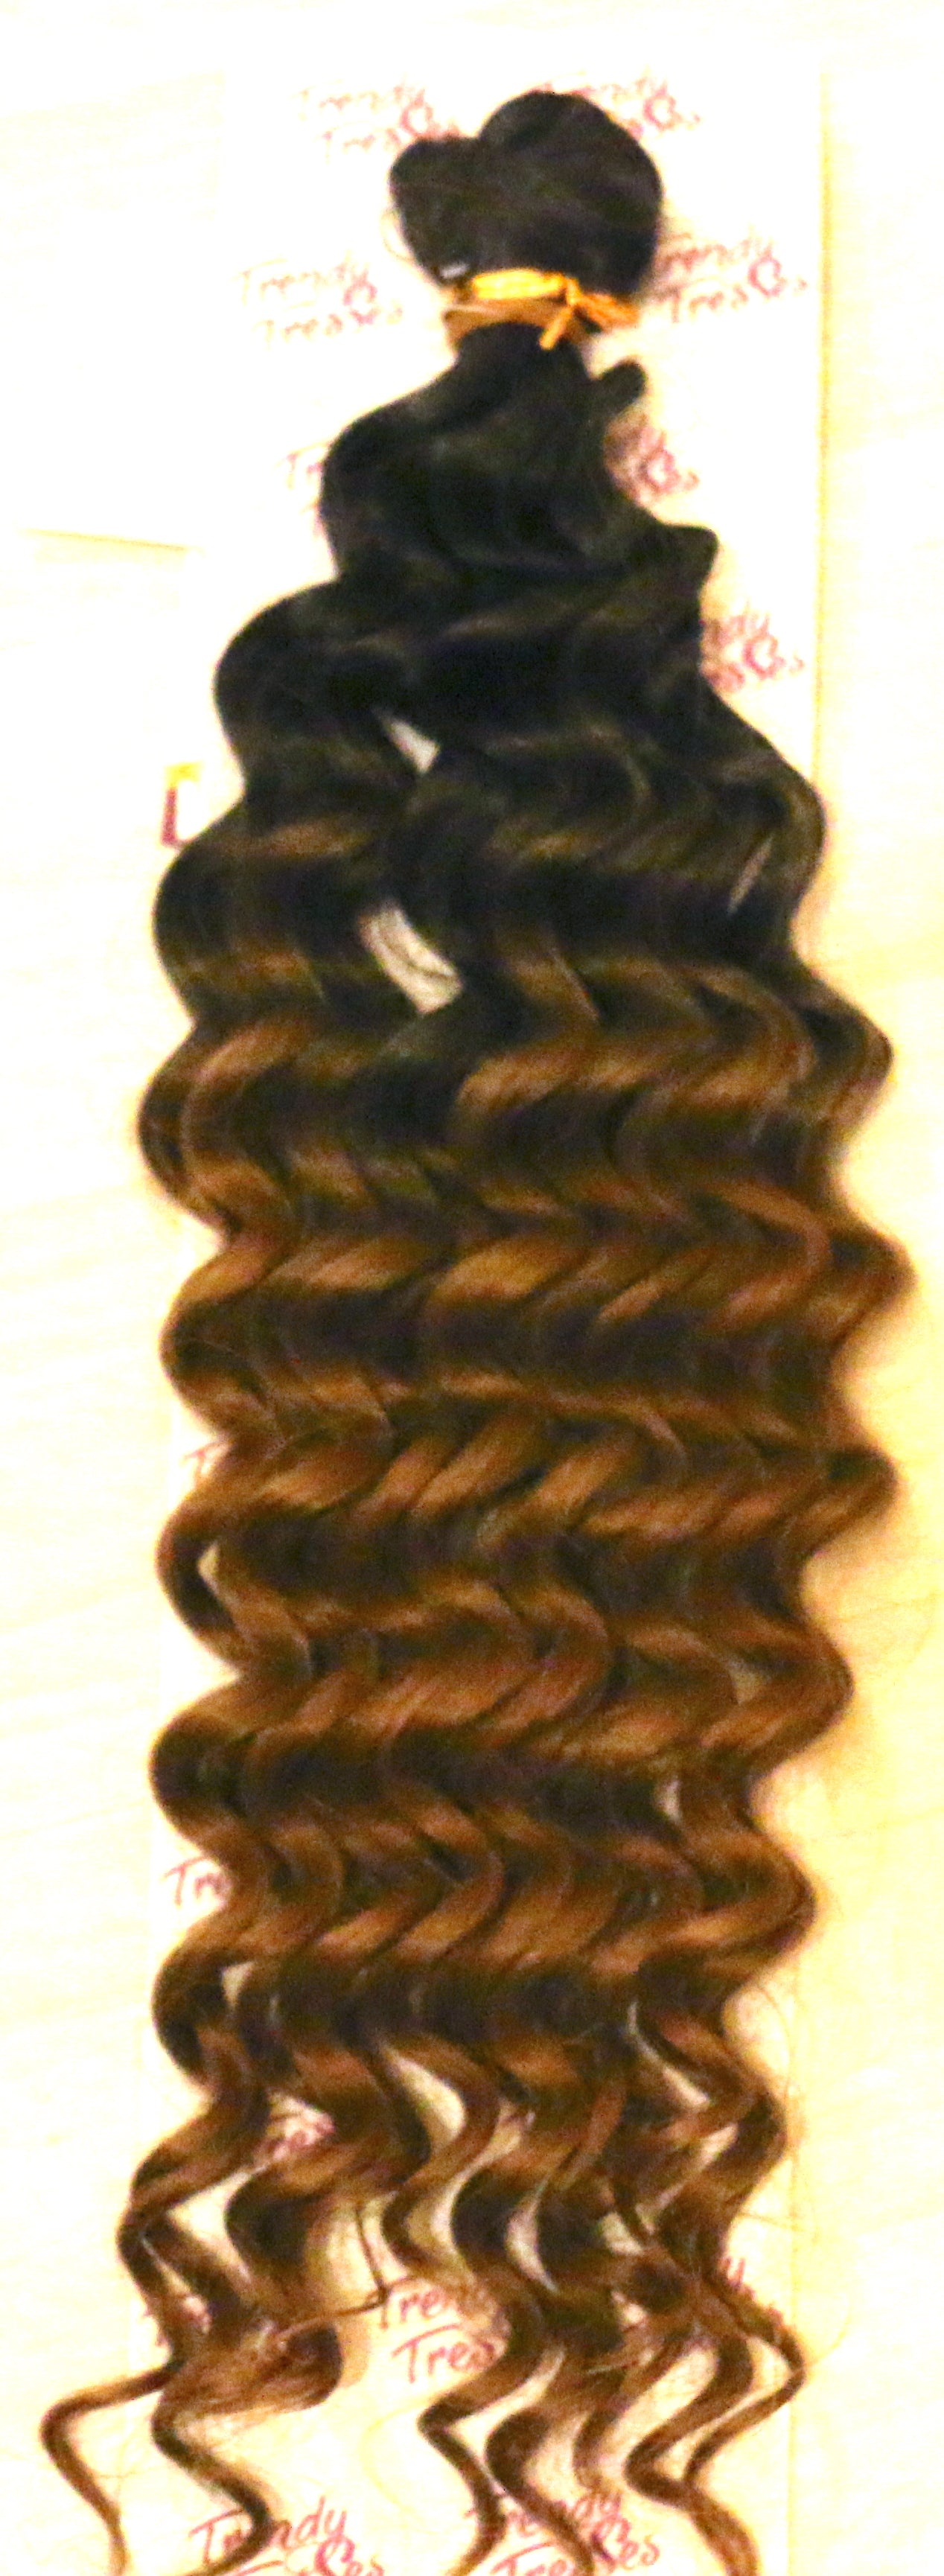 Goddess Curls - Trendy Tresses